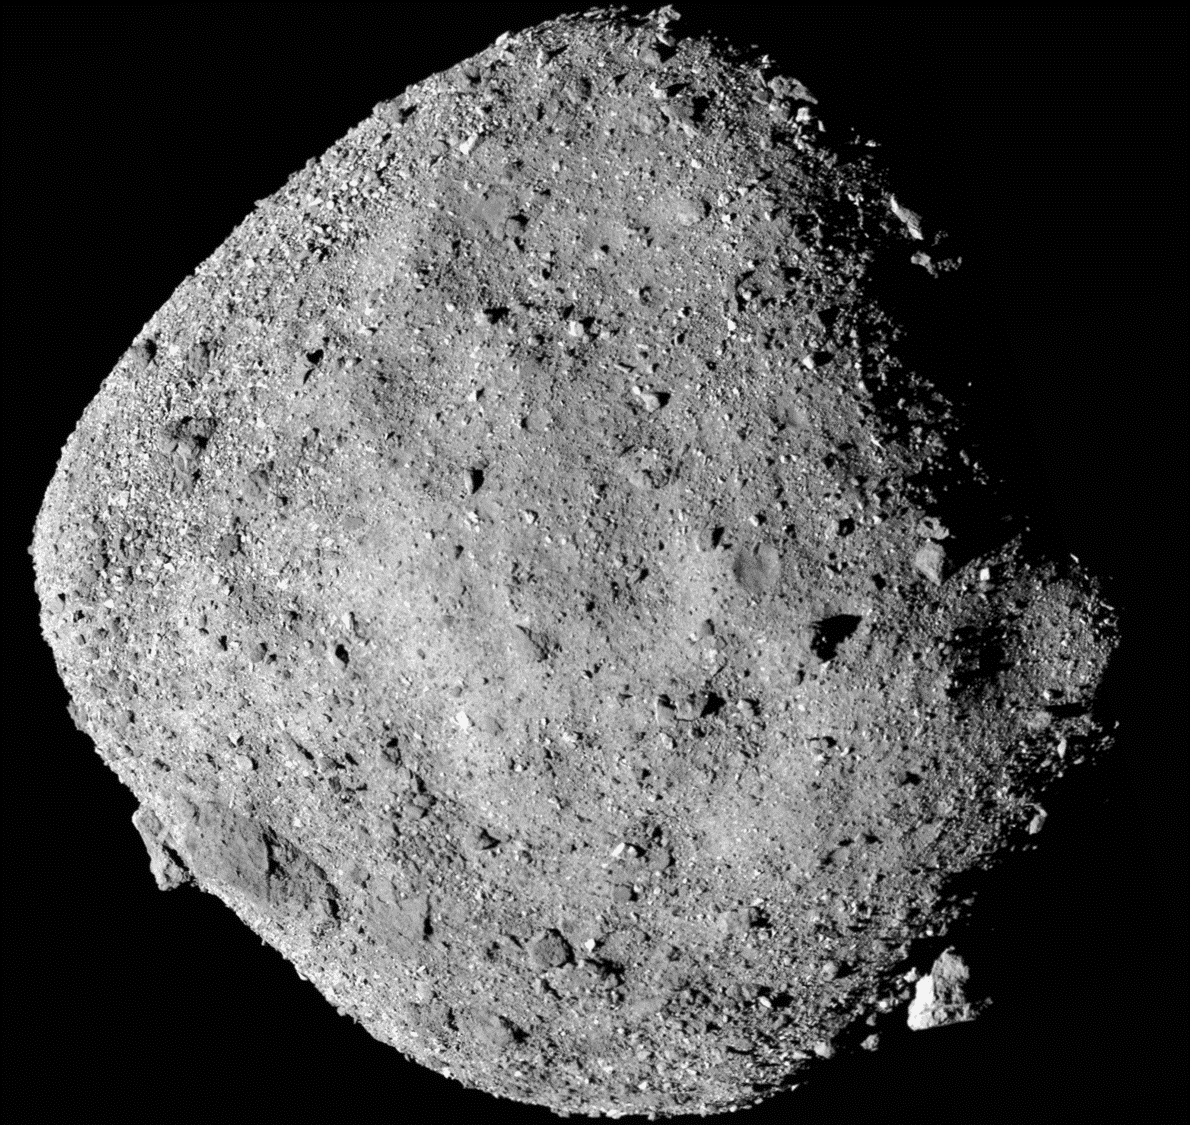 NASA’s OSIRIS-REx spacecraft tags asteroid Bennu to return materials